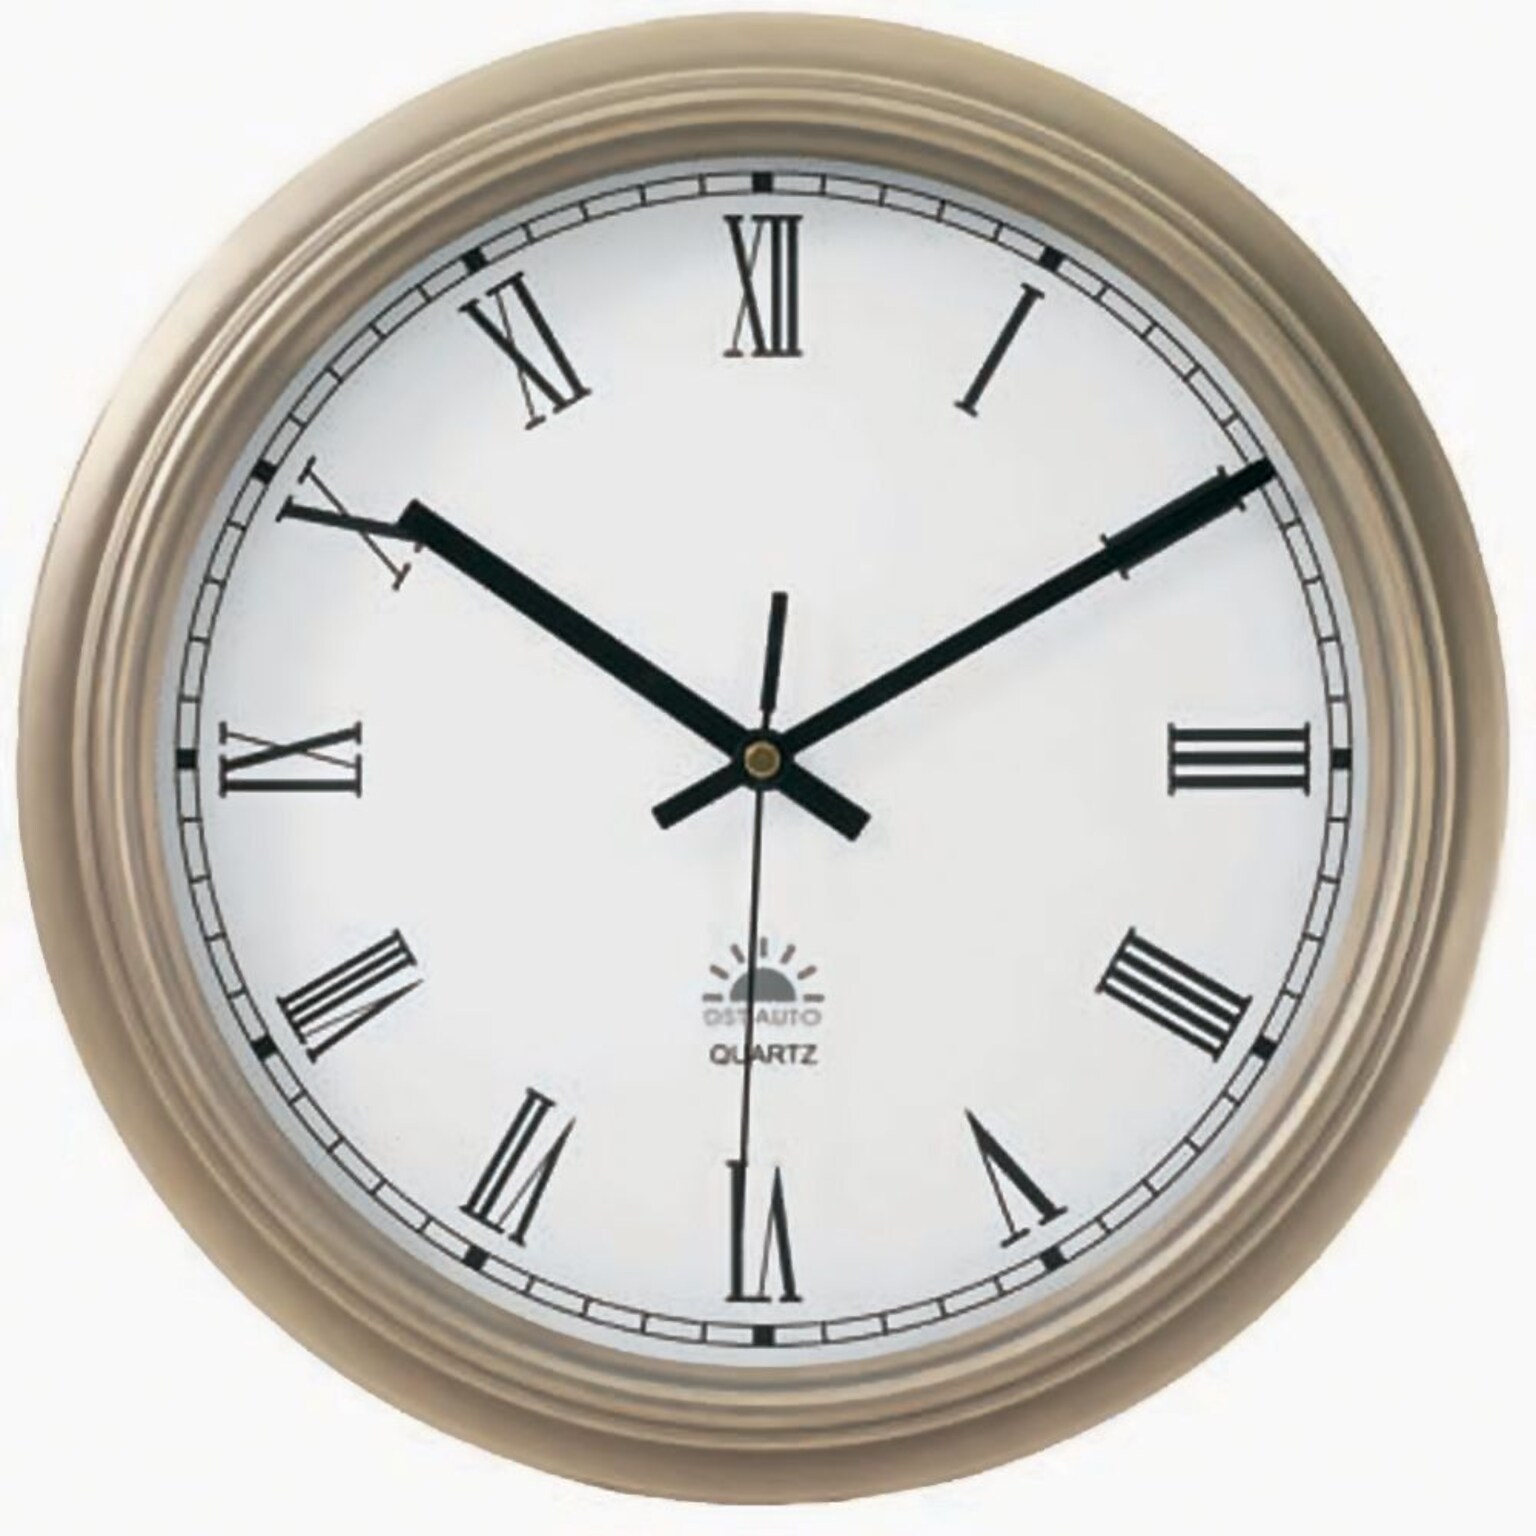 TEMPUS Transitional Wall Clock with Daylight Savings Auto-Adjust Movement, Metal 12.5, Bronze Finish (TC6080BRZ)